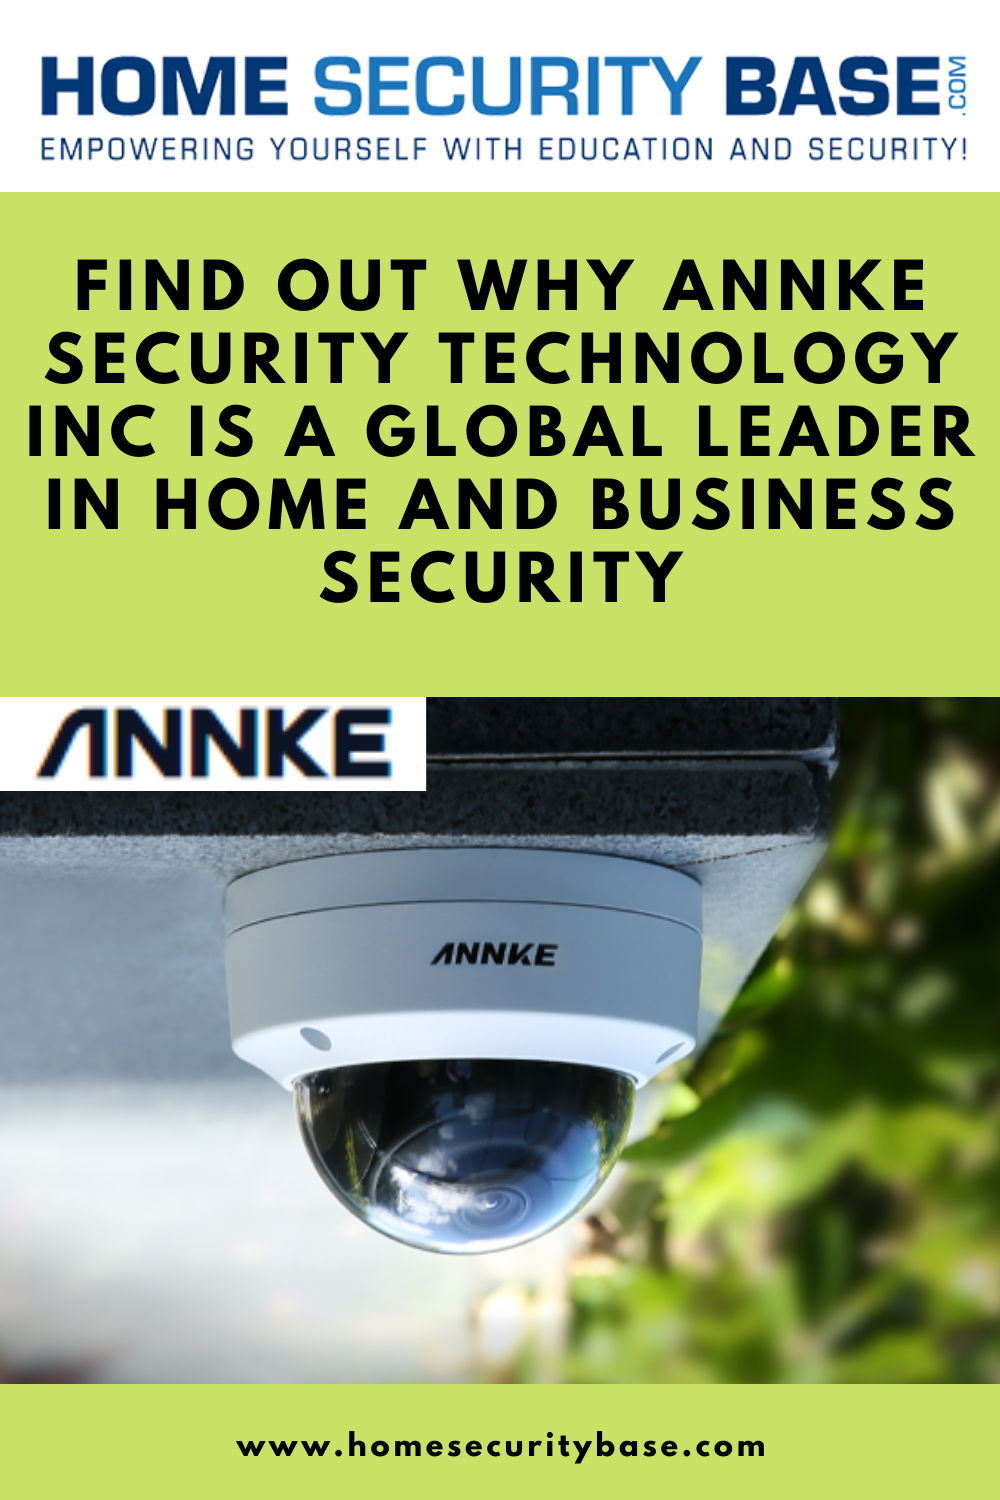 Annke Security Technology Inc